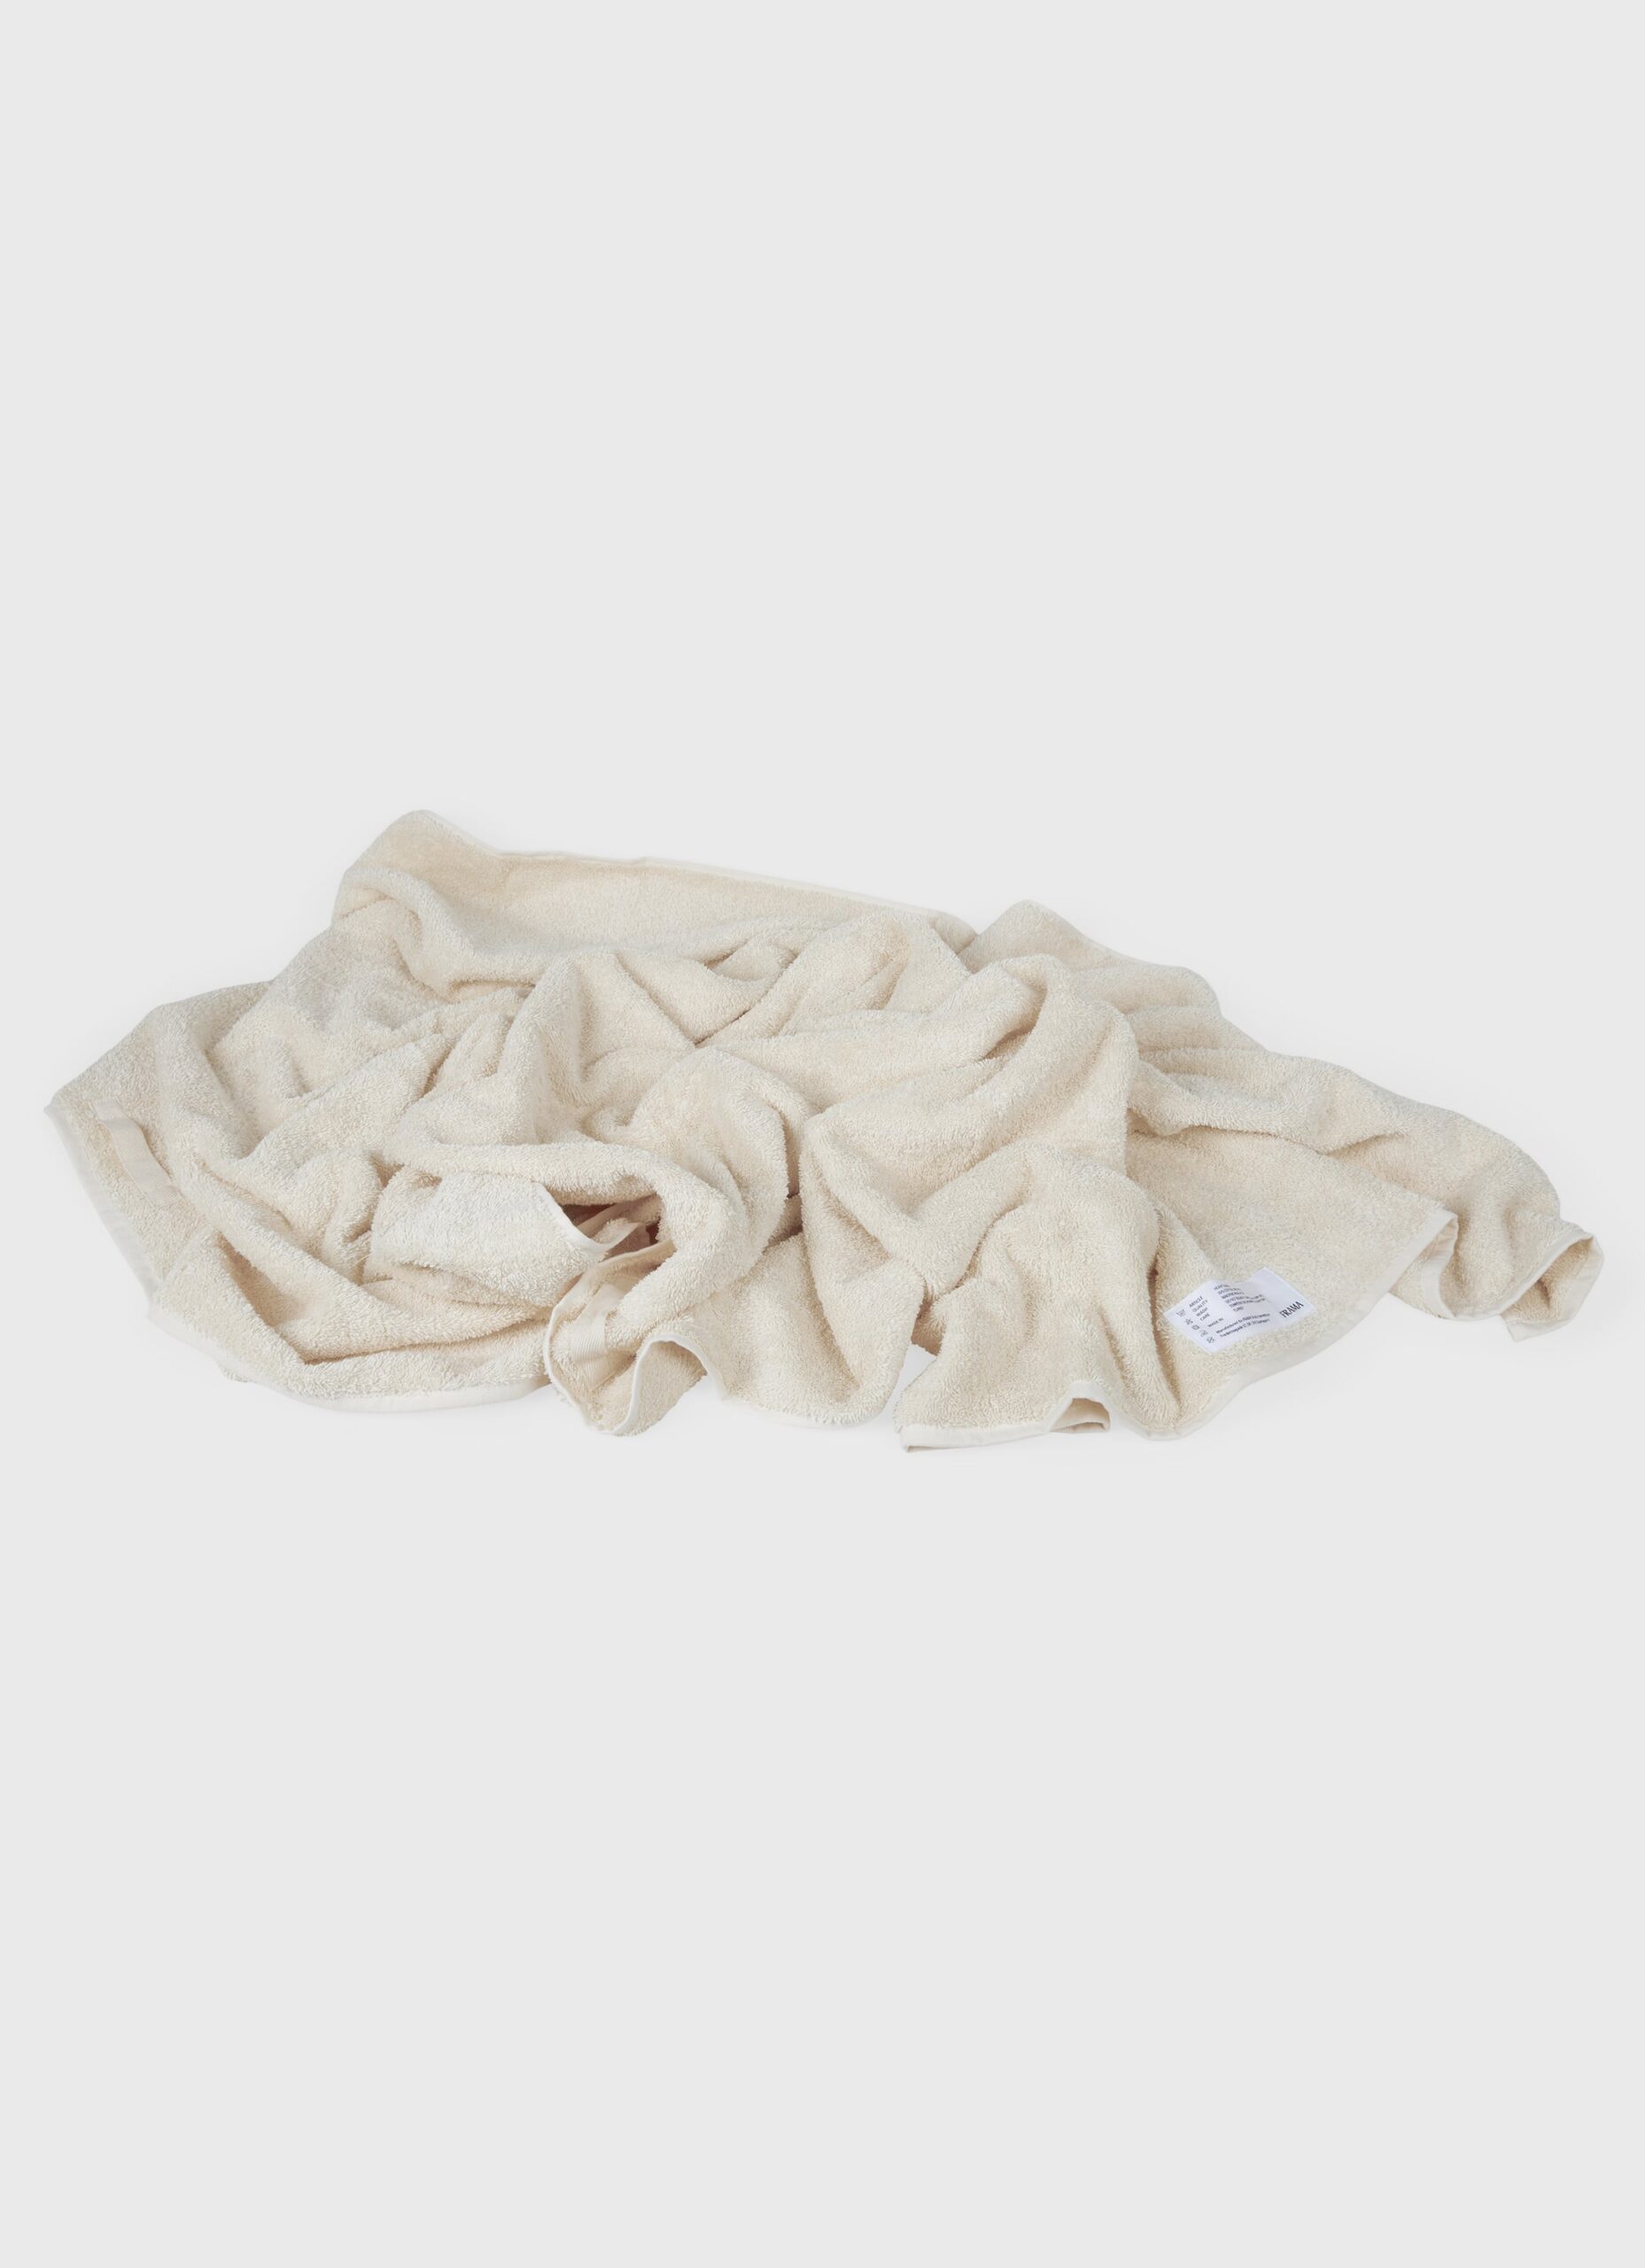 Frama - Heavy Towel - Bone White - Bath Sheet